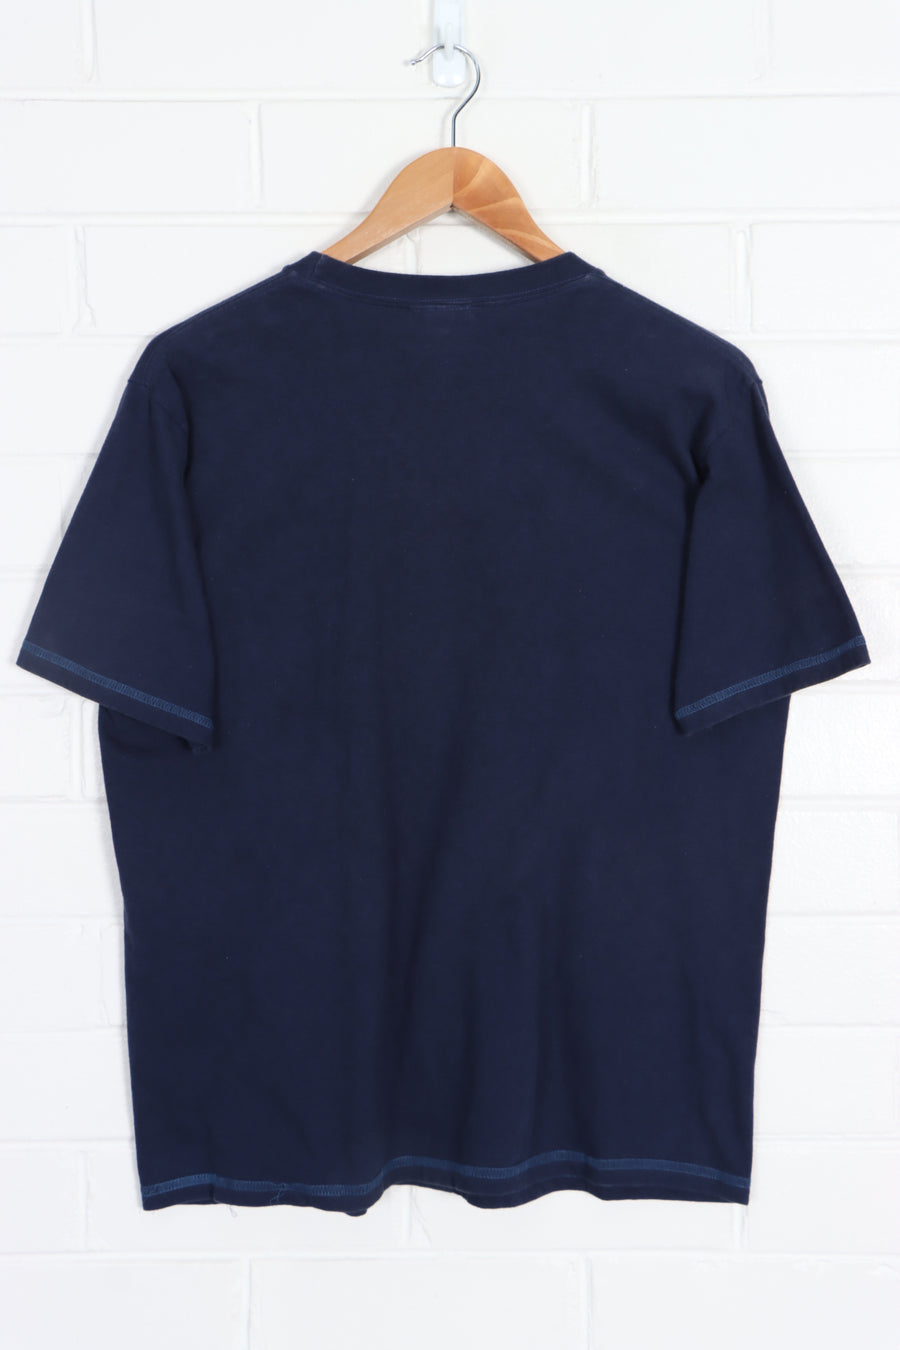 NIKE Blue Toned Swoosh Logo T-Shirt (M)